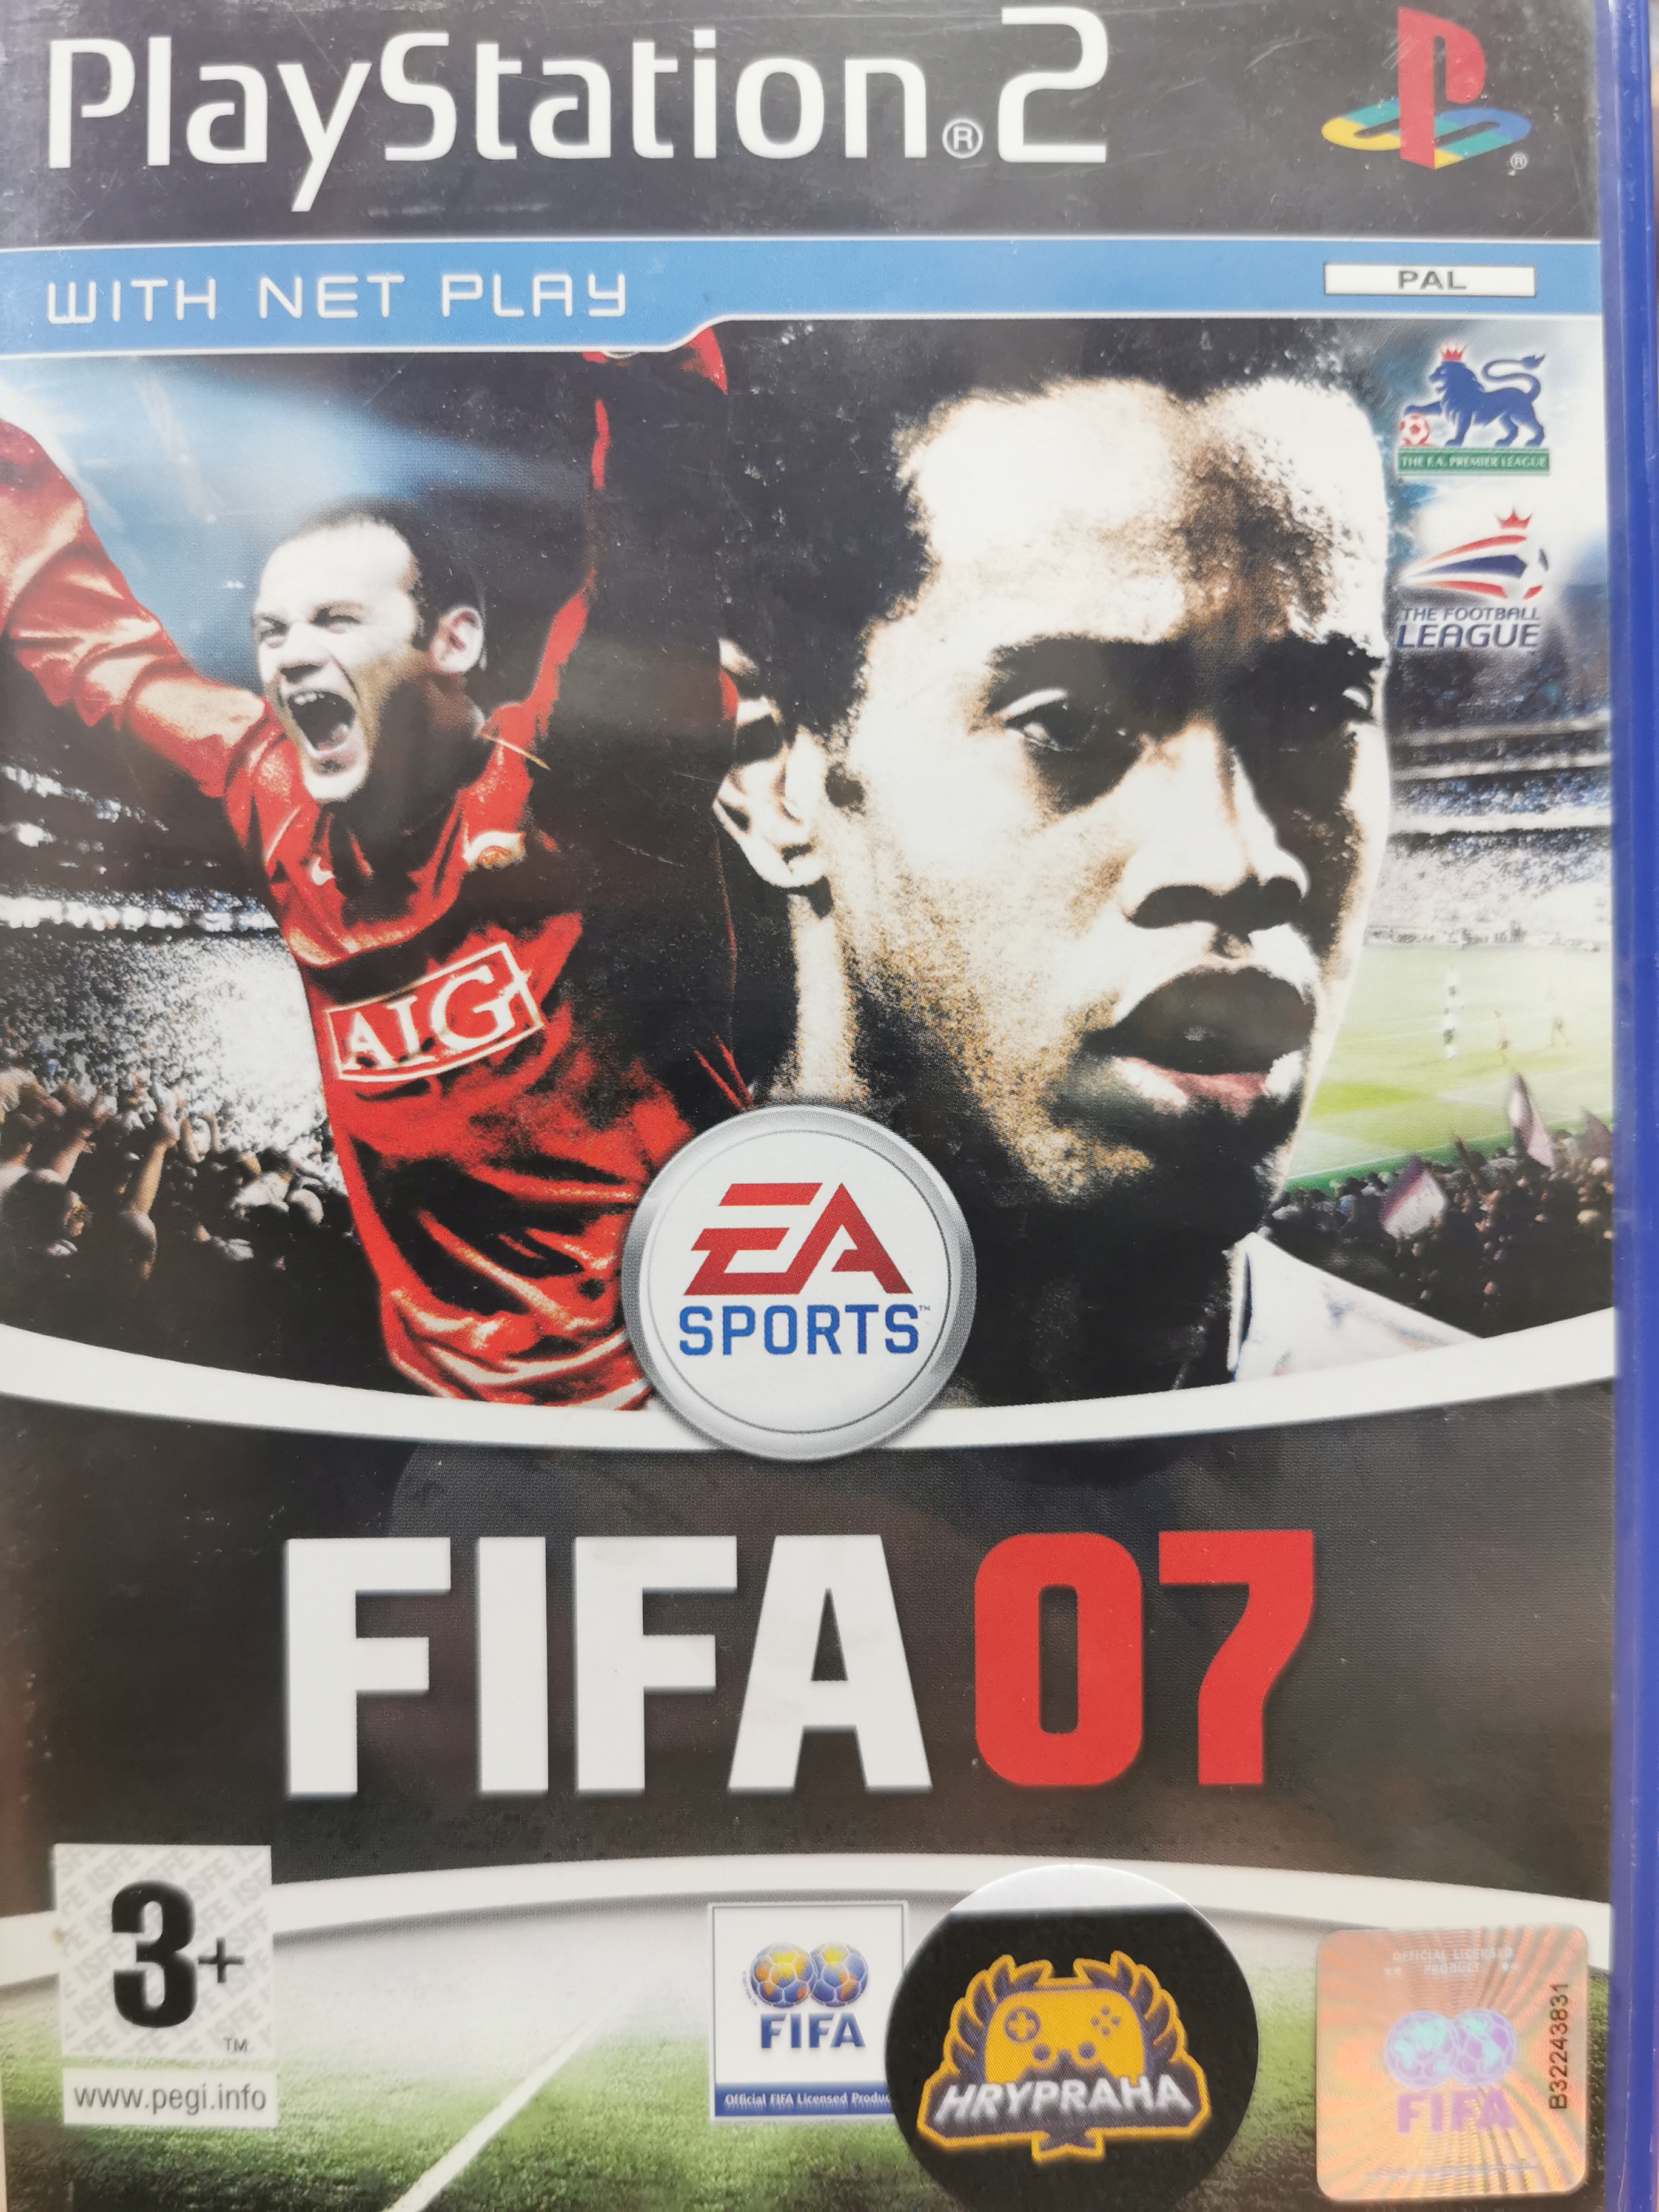 FIFA 07 PS2